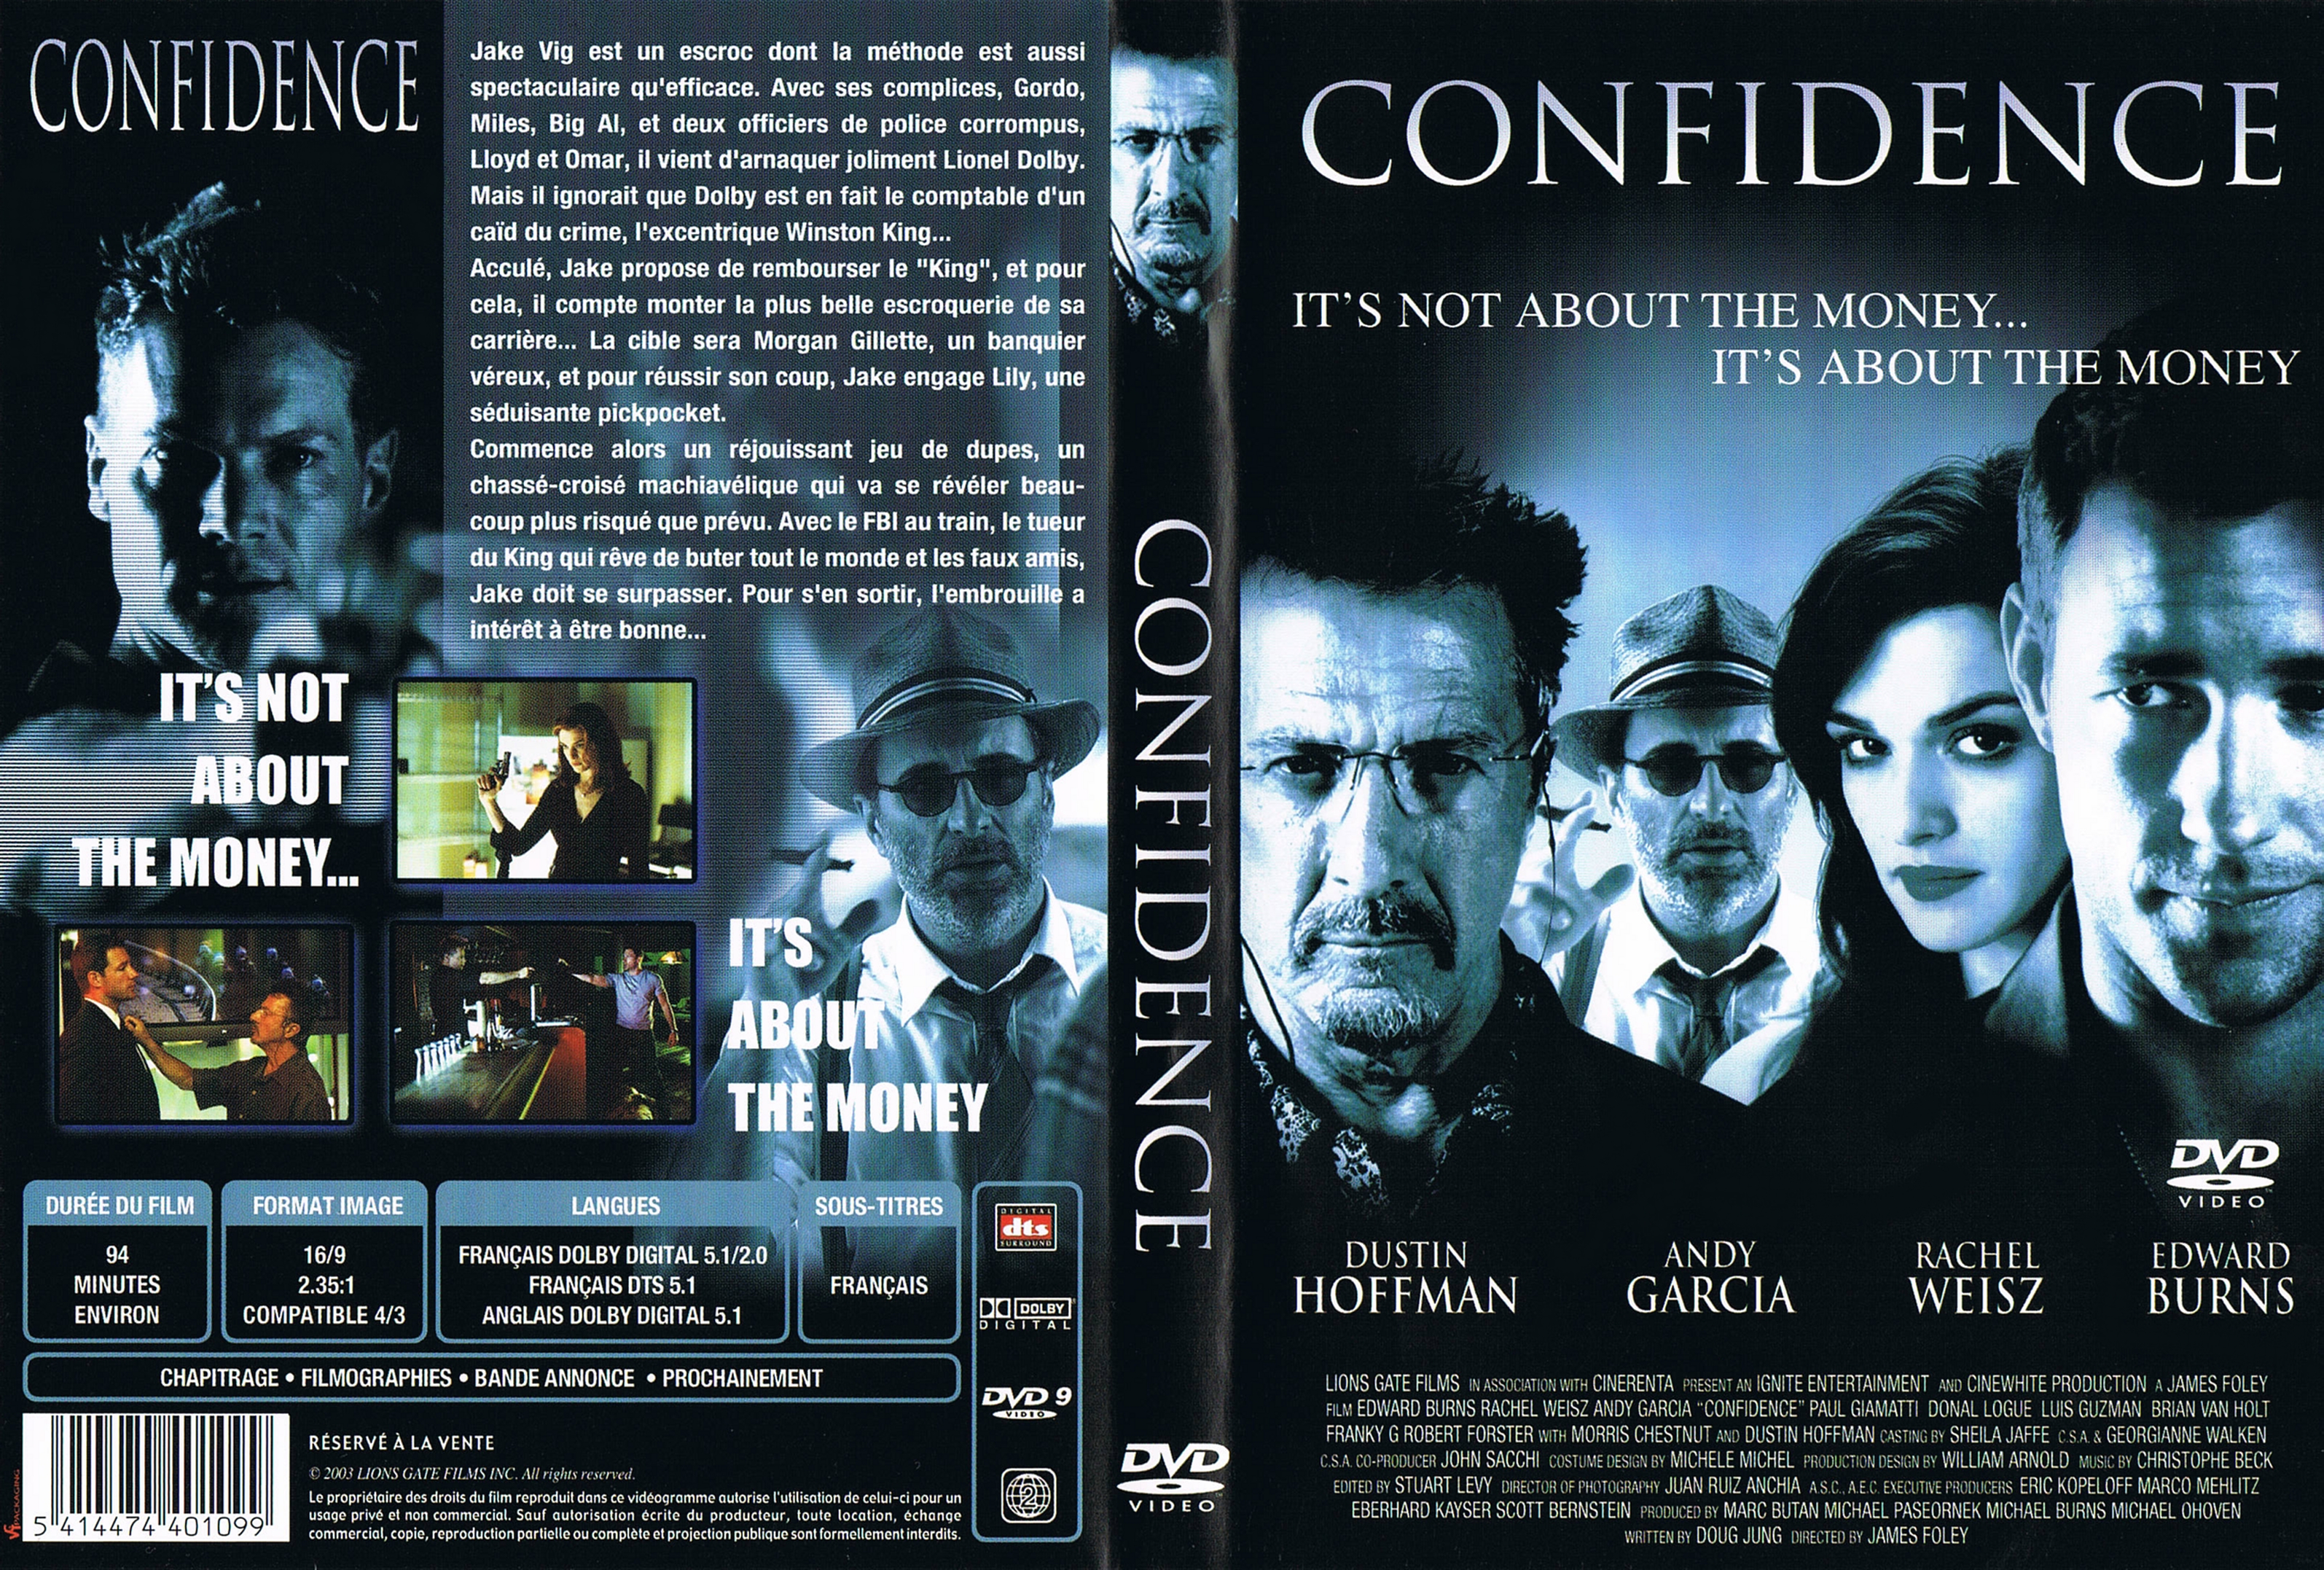 Jaquette DVD Confidence v3